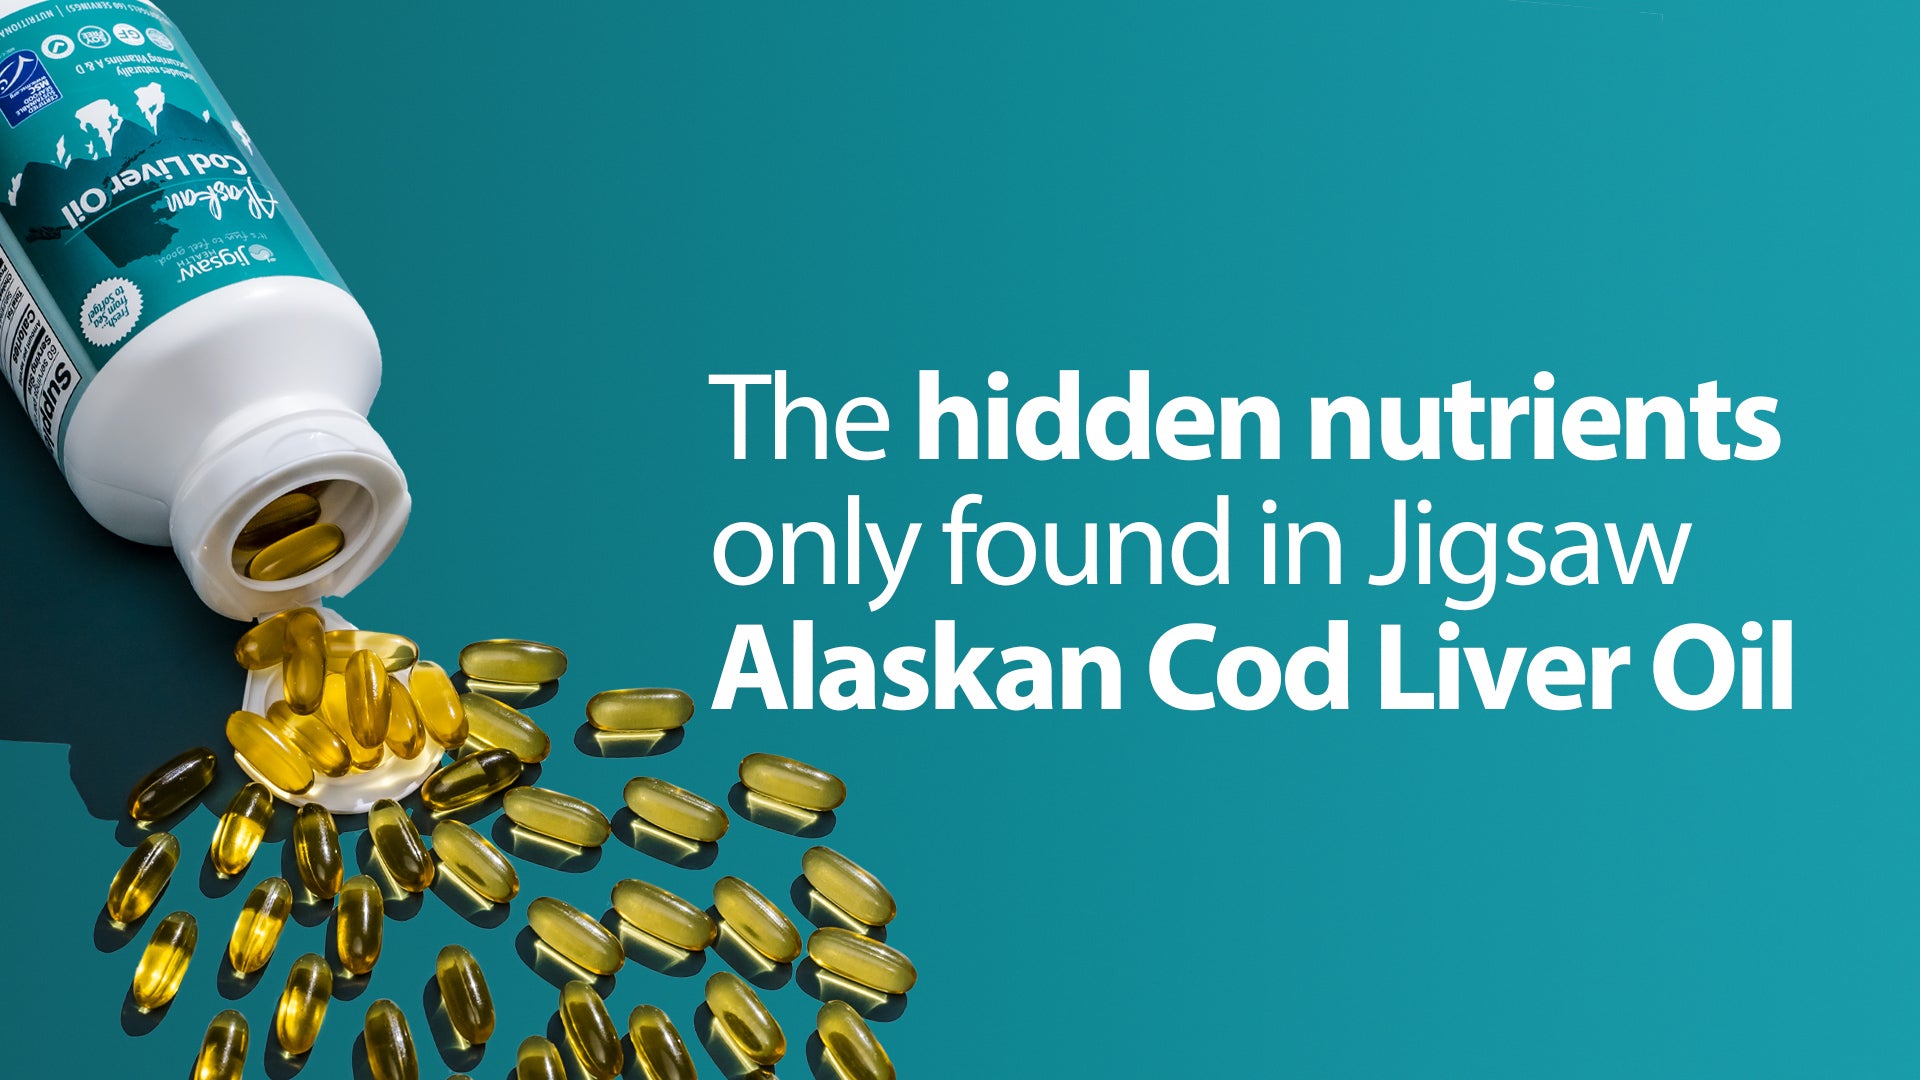 The Hidden Nutrients only found in Jigsaw Alaskan Cod Liver Oil.